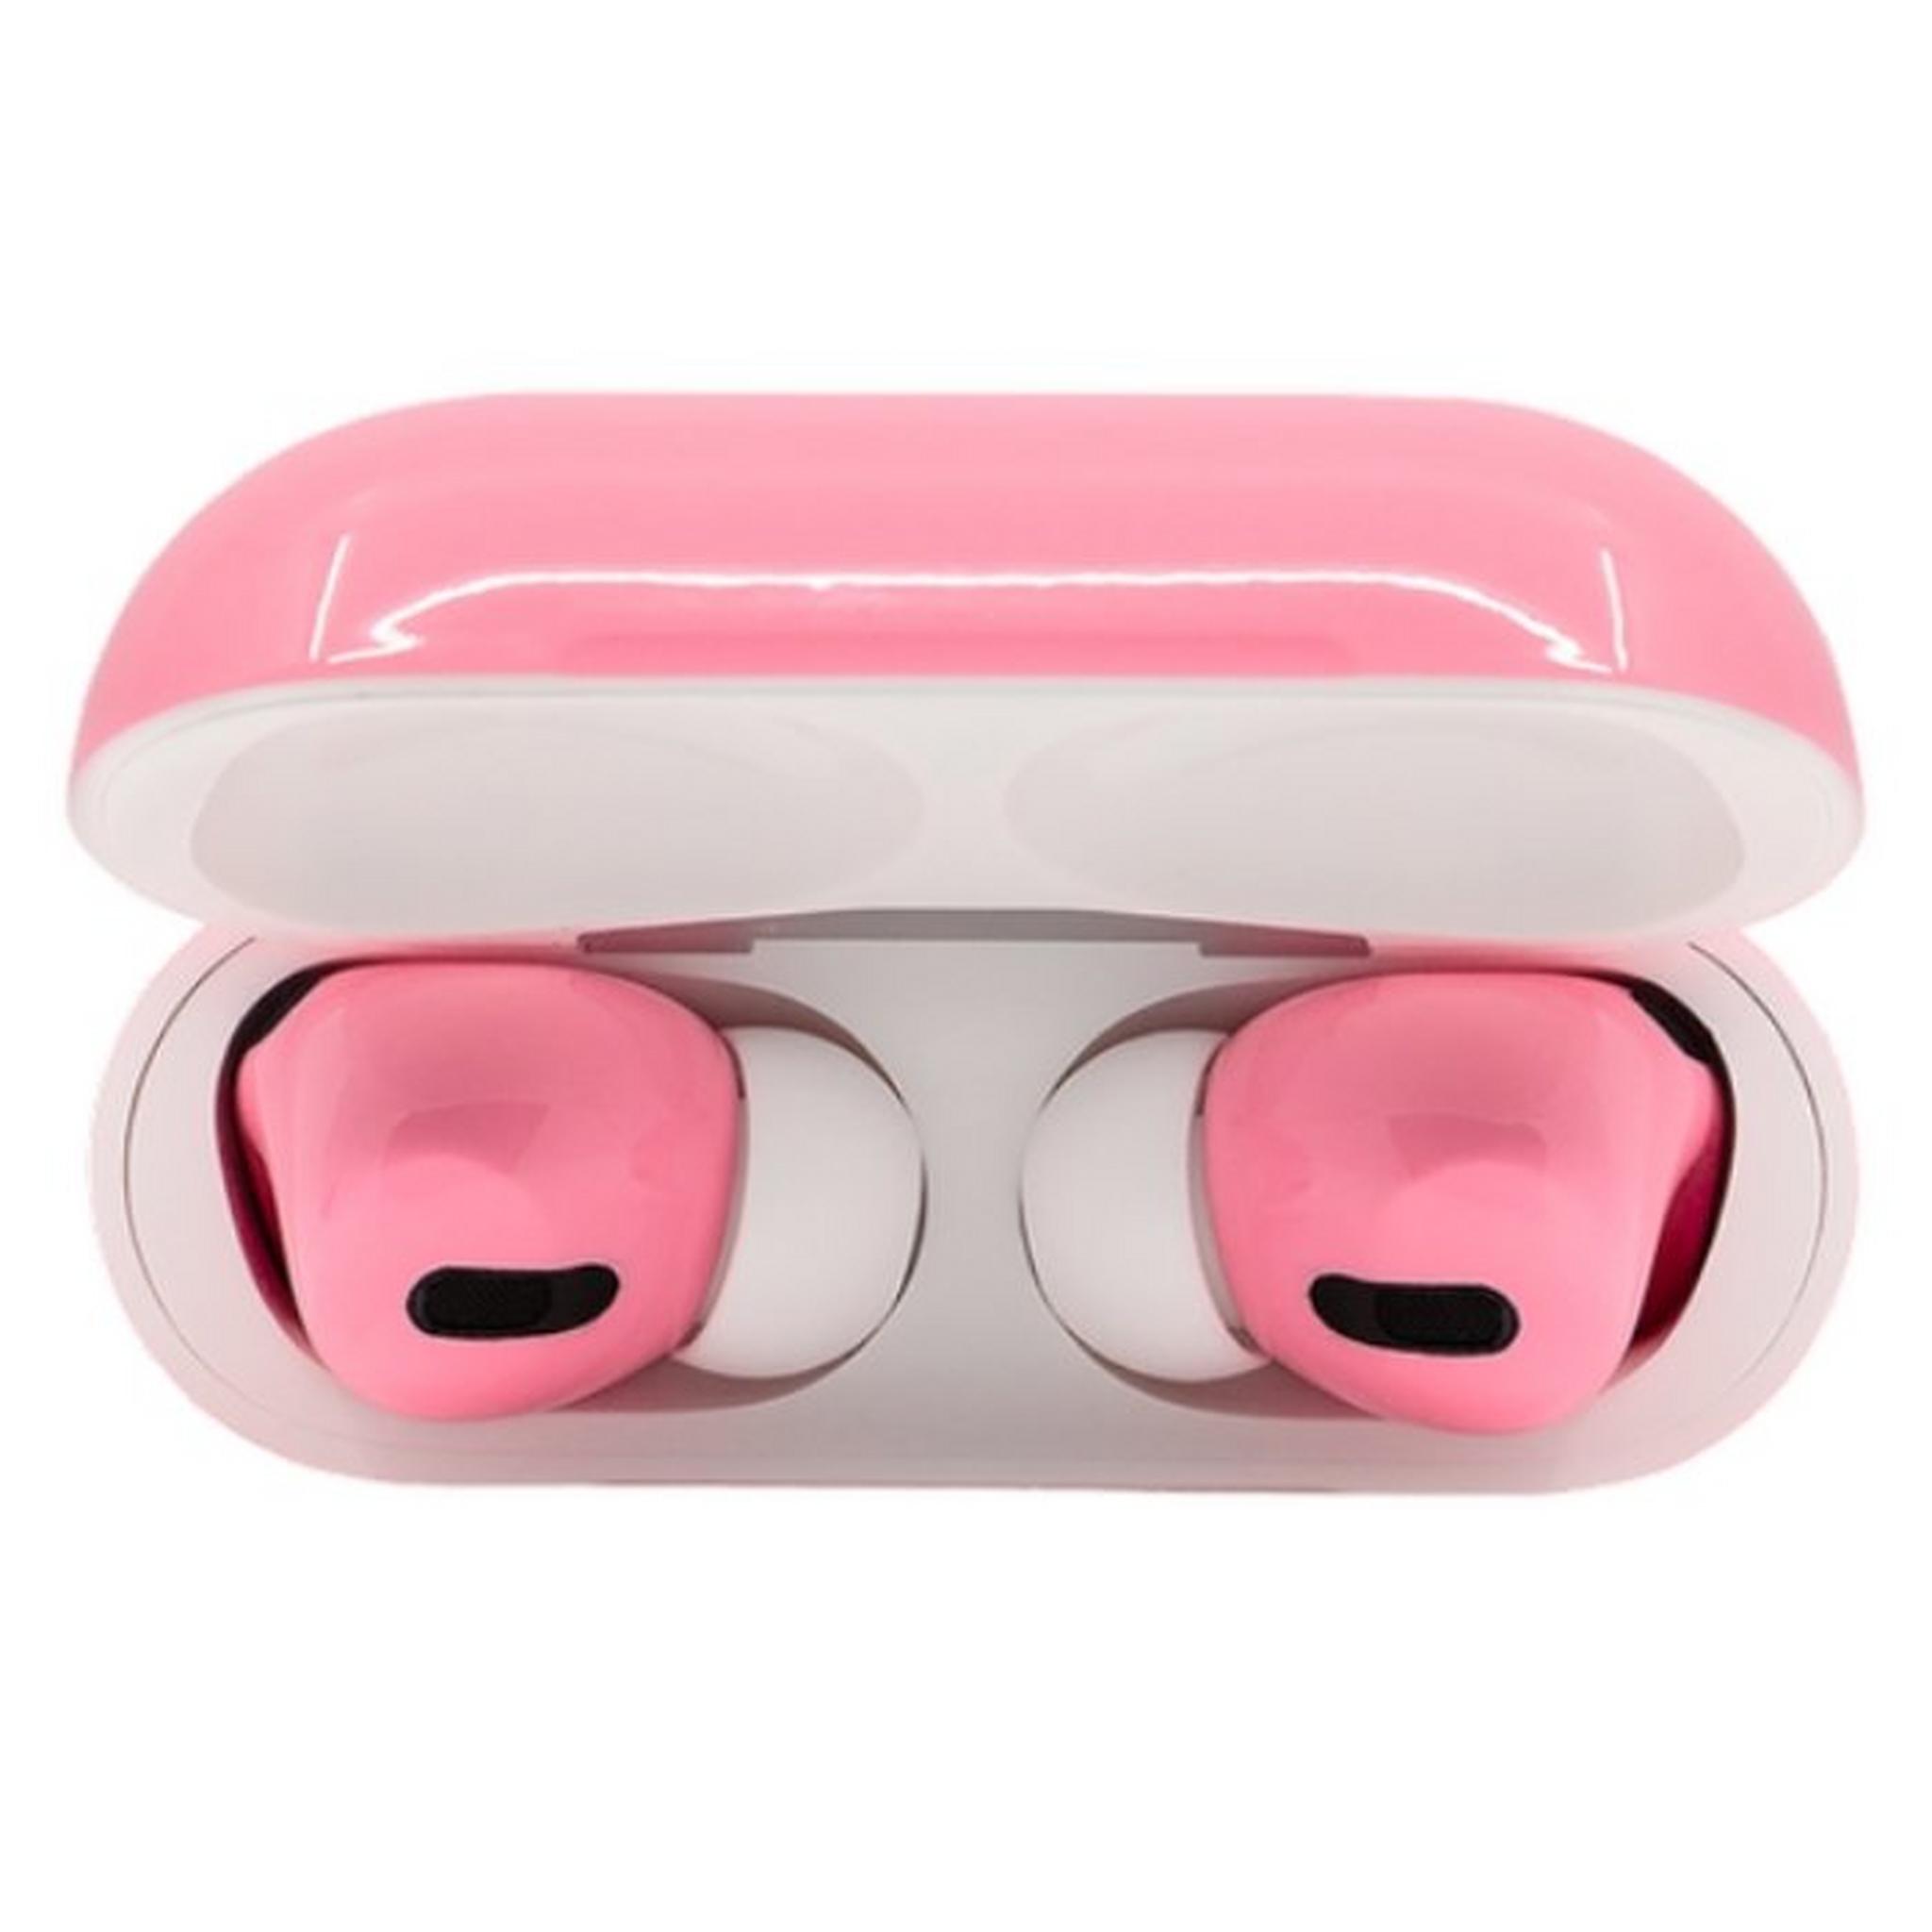 Switch Paint Airpods Pro MagSafe - Romance Pink Gloss